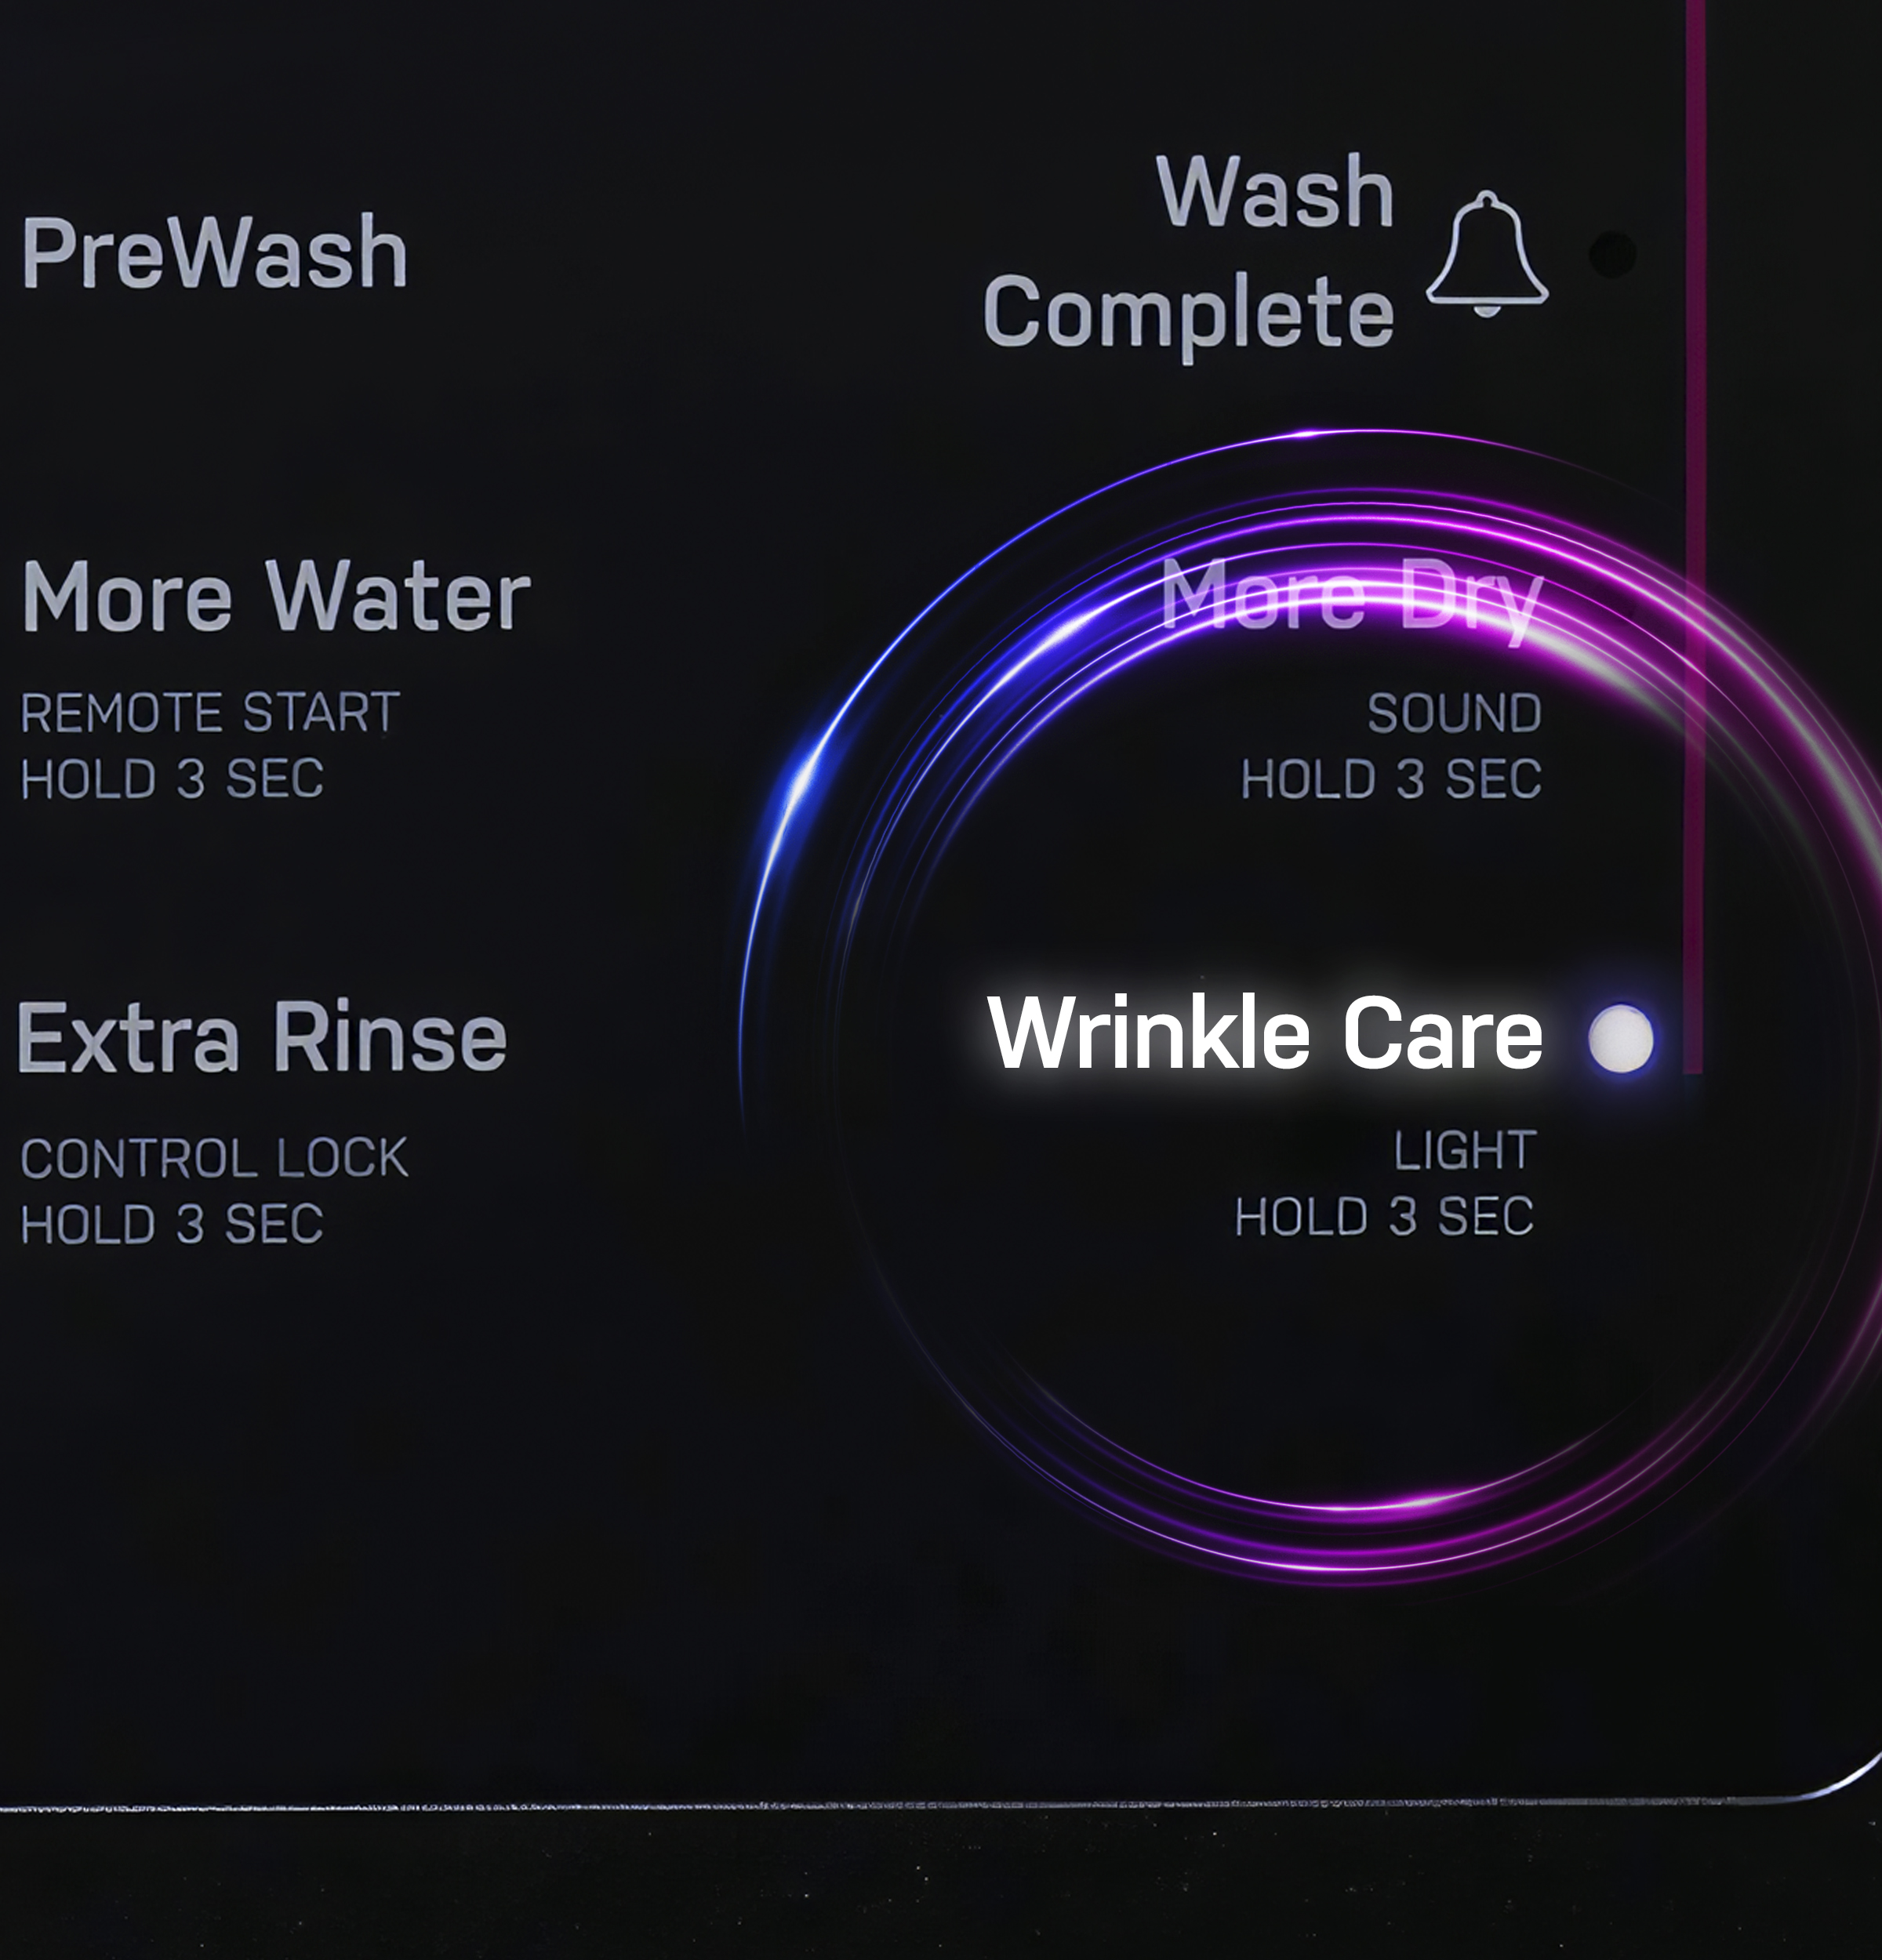 Wrinkle Care